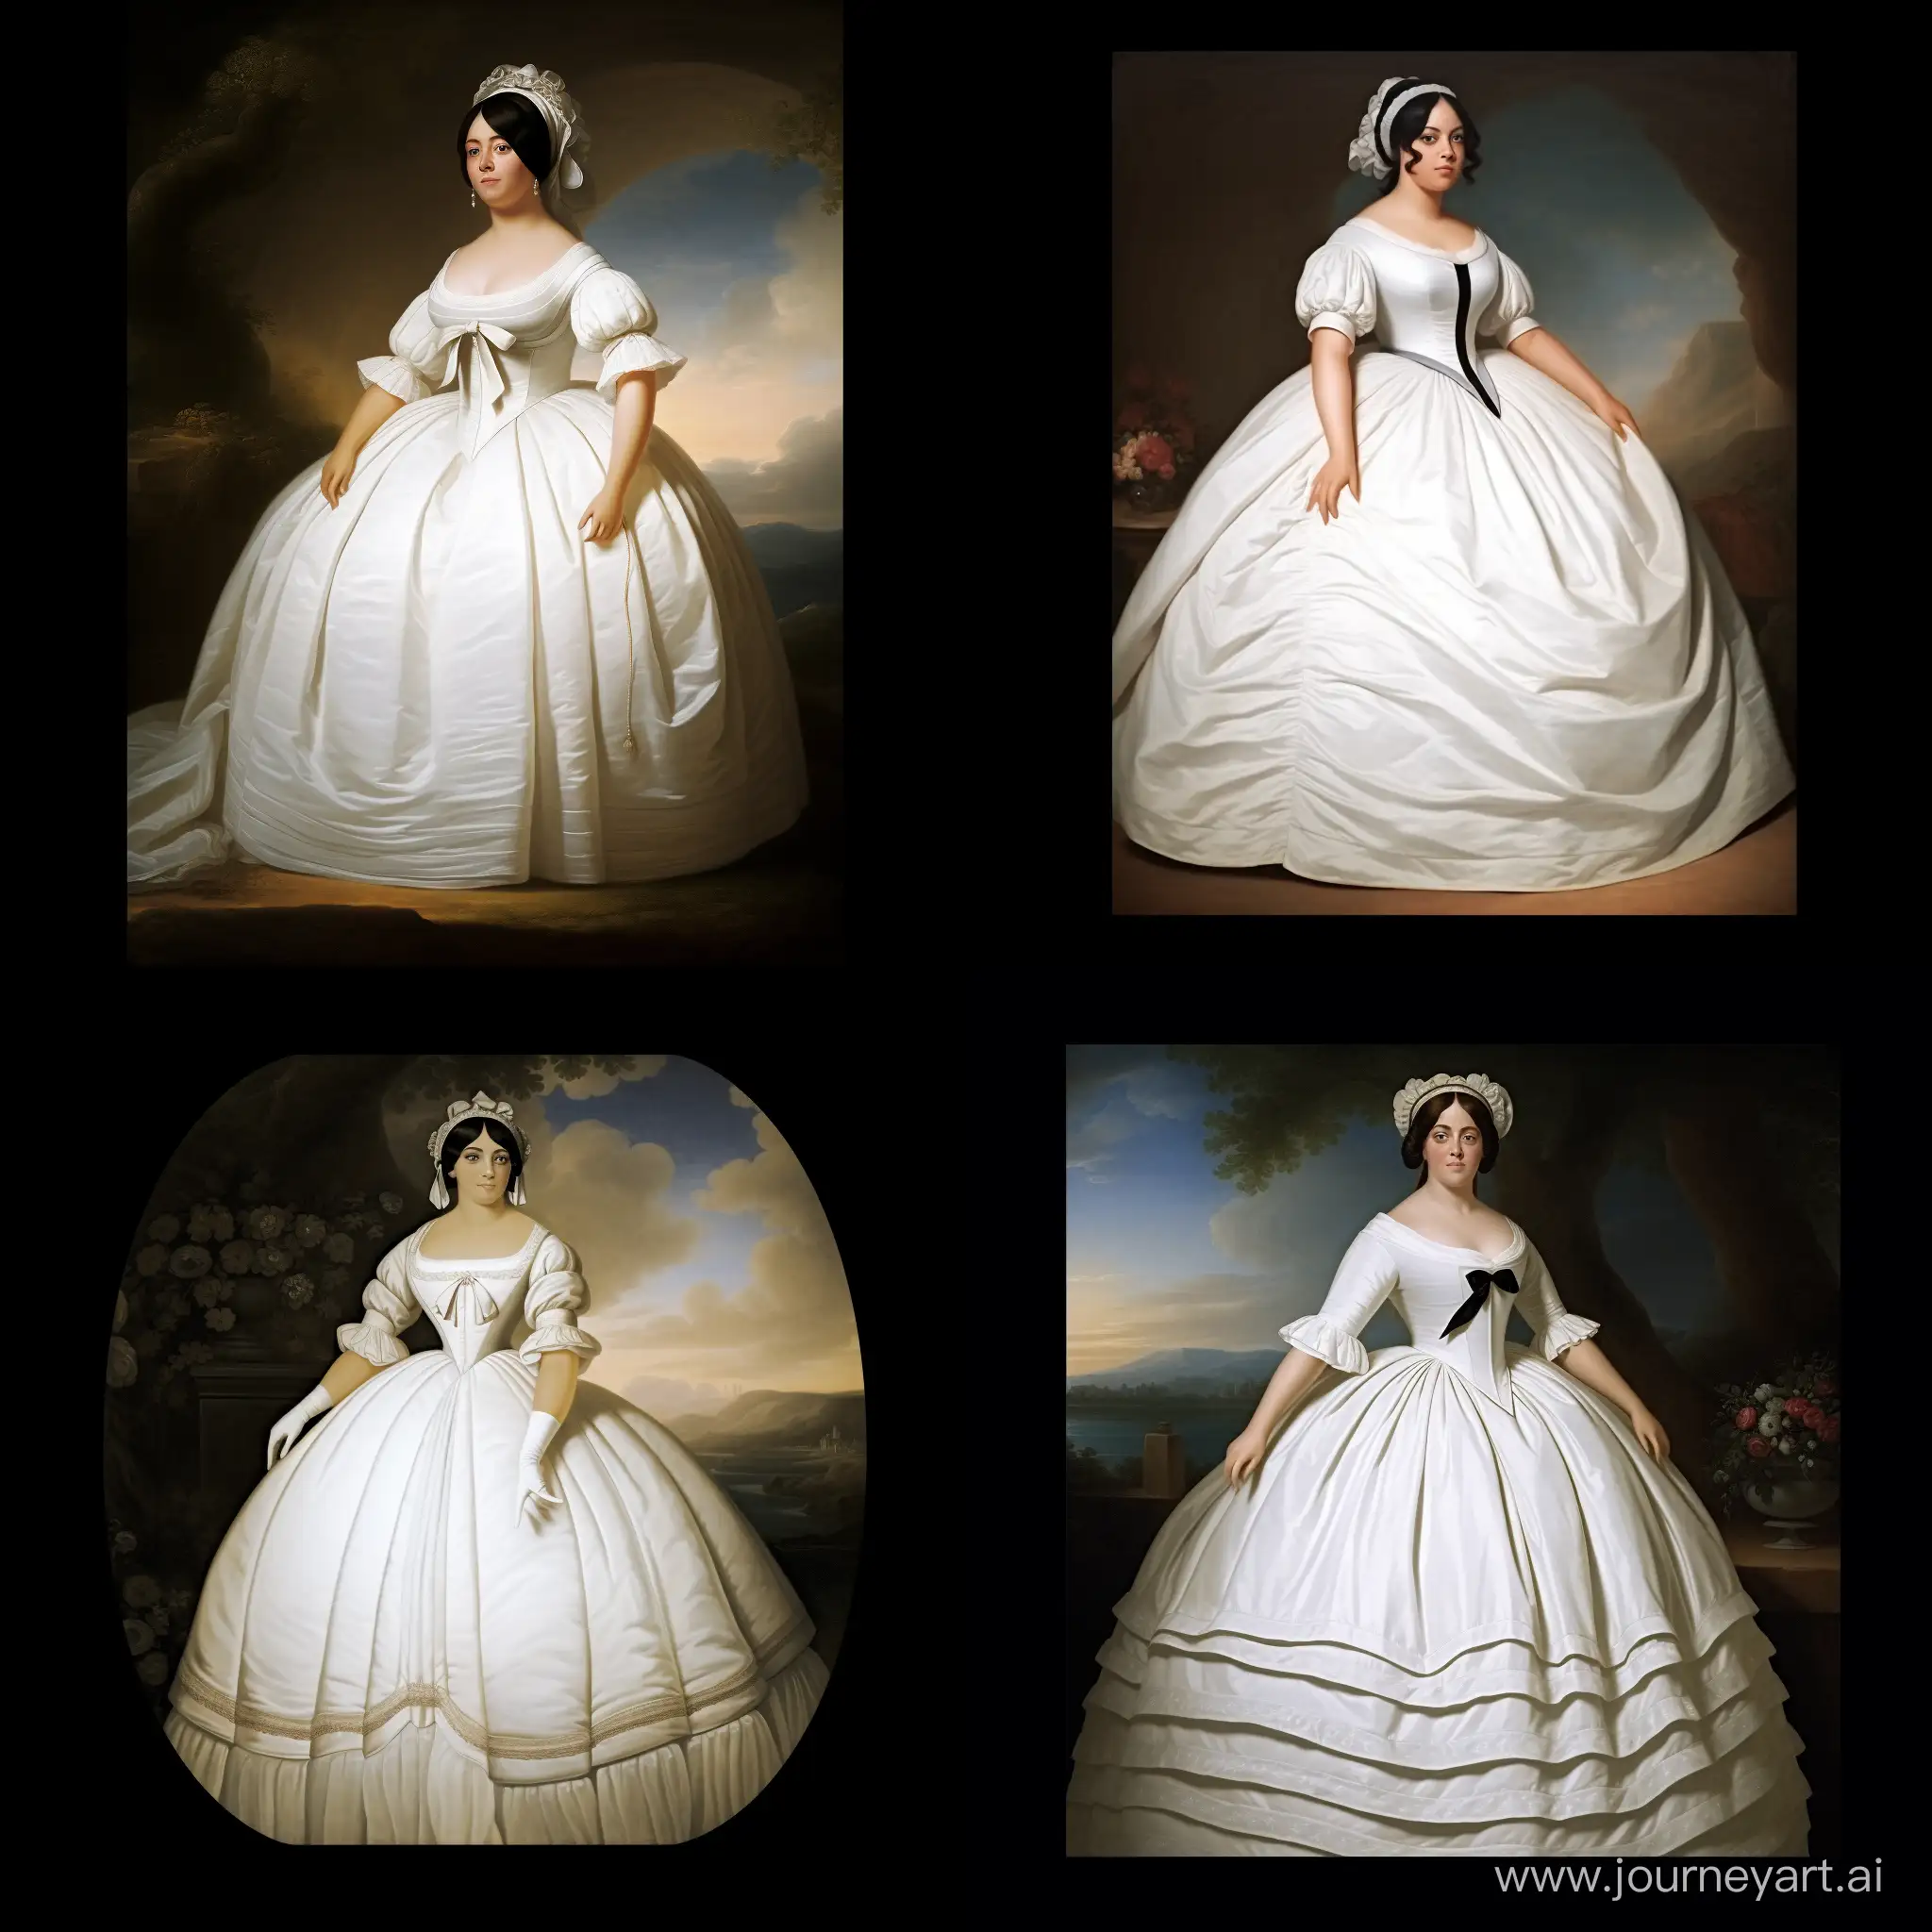 Charming-19th-Century-British-Bride-in-Elegant-White-Dress